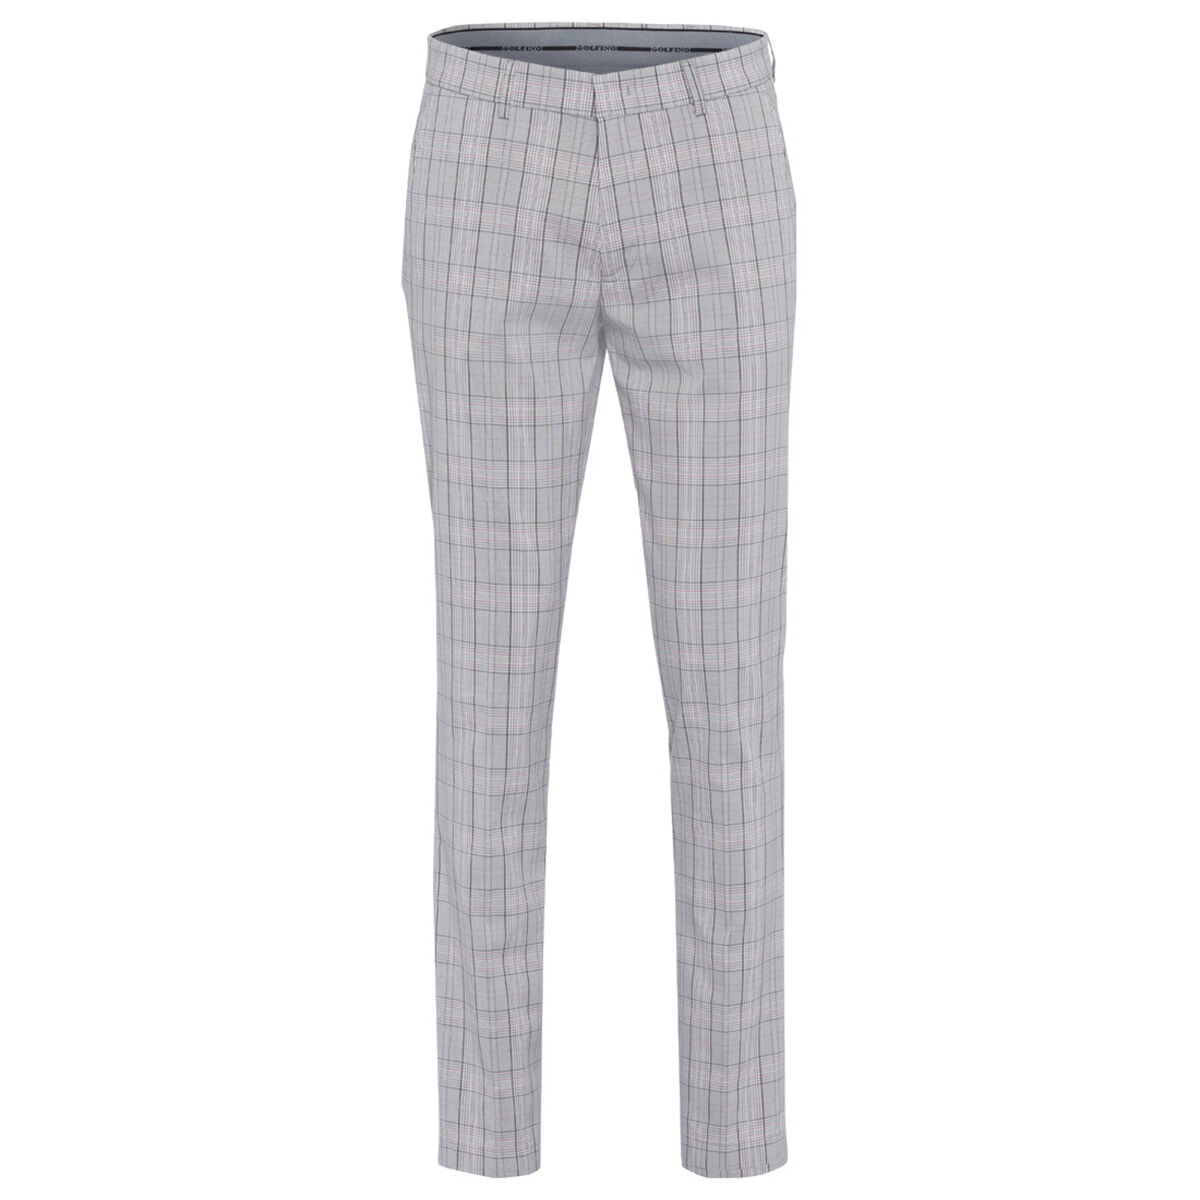 Pantalon GOLFINO Checked Stretch Slim, homme, Normal, Gris, 48 | Online Golf